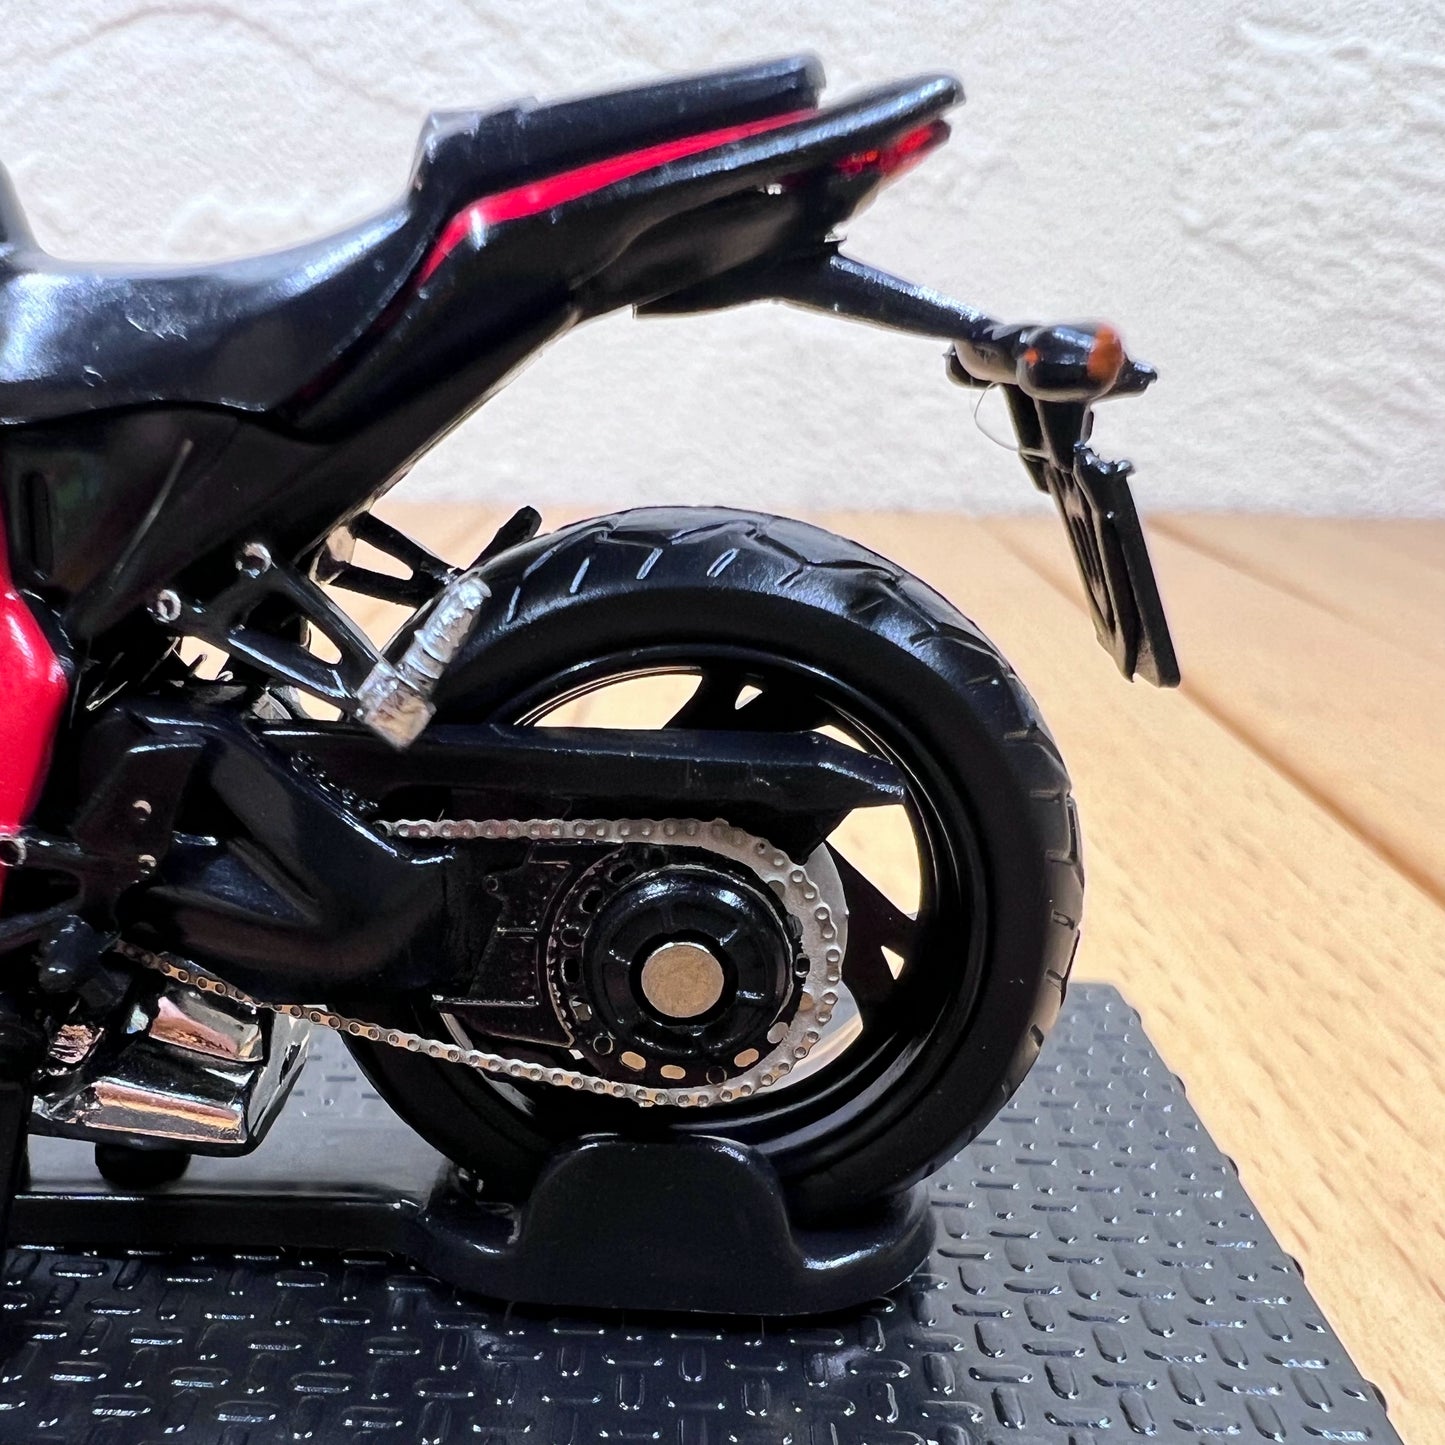 1/24 Scale 2010 Honda CB1000R Motorcycle Diecast Model